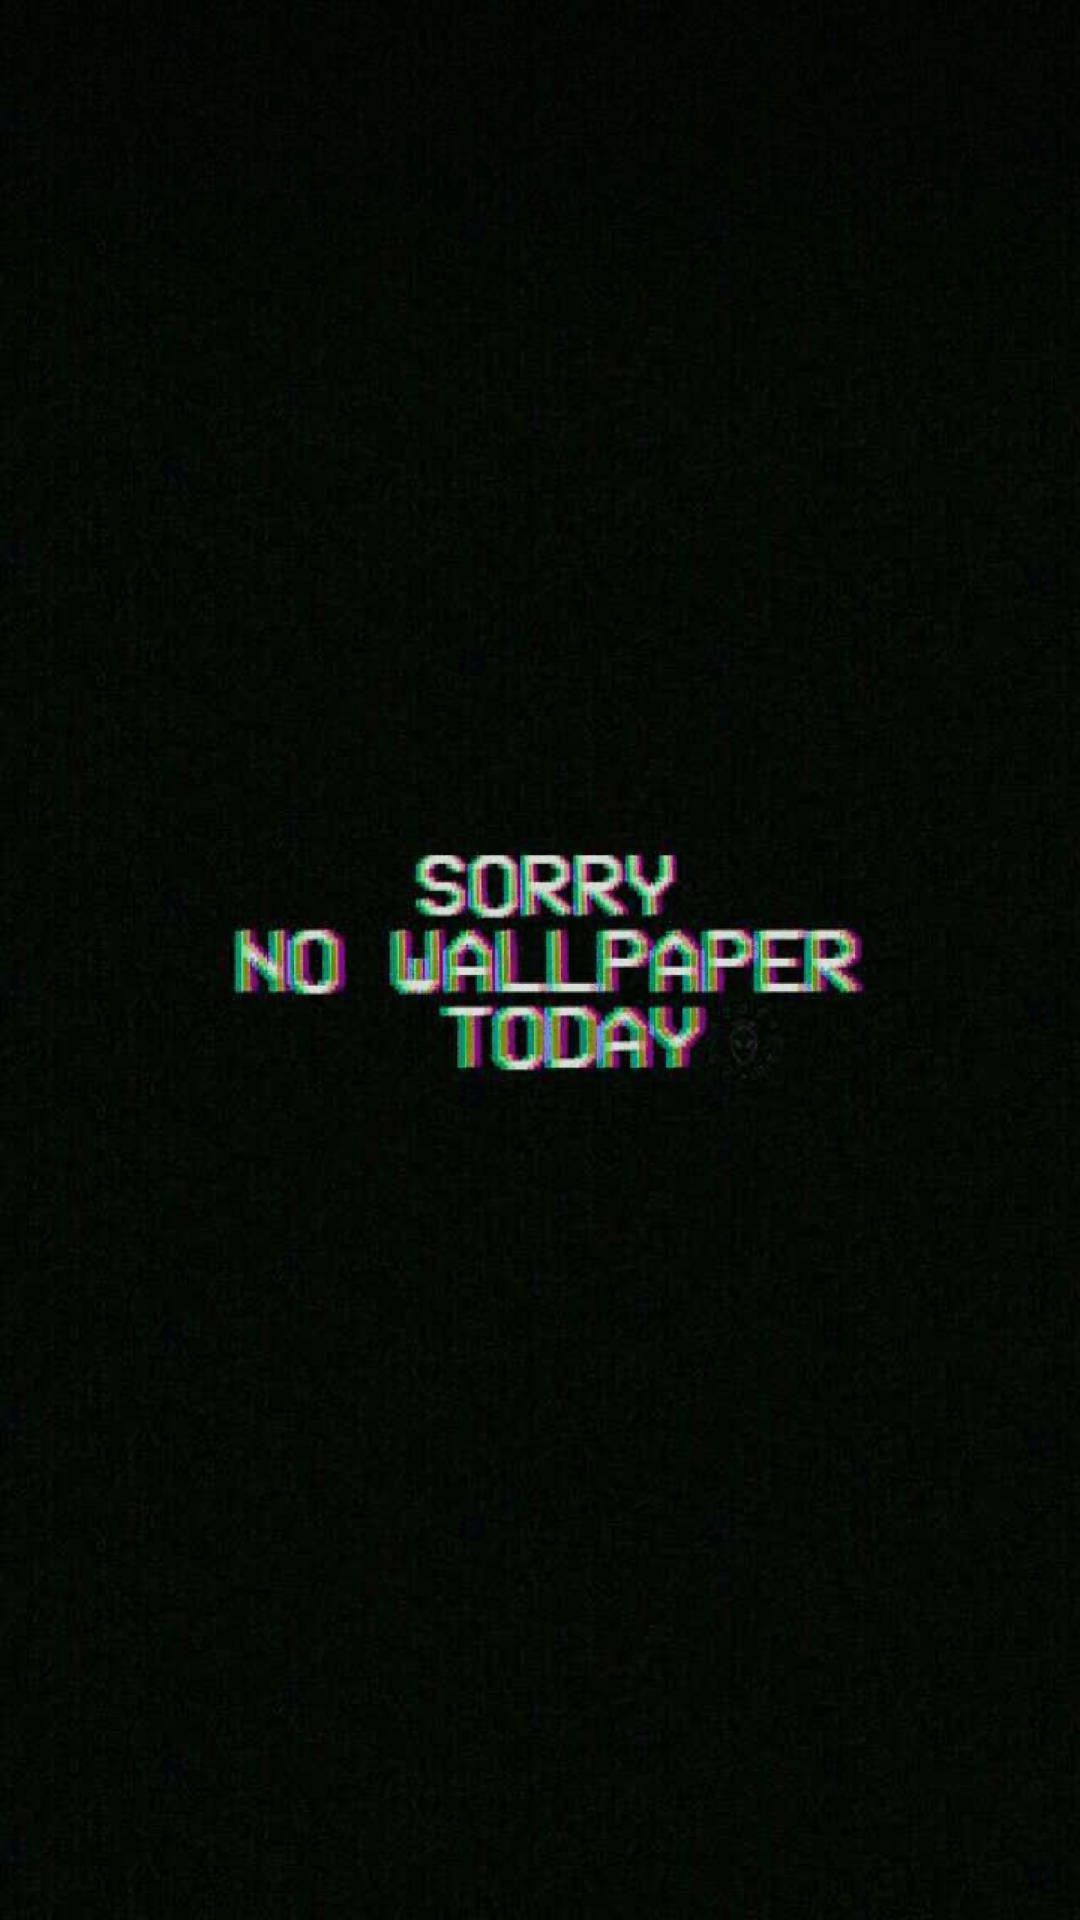 Sorry, no wallpaper today - Dark vaporwave